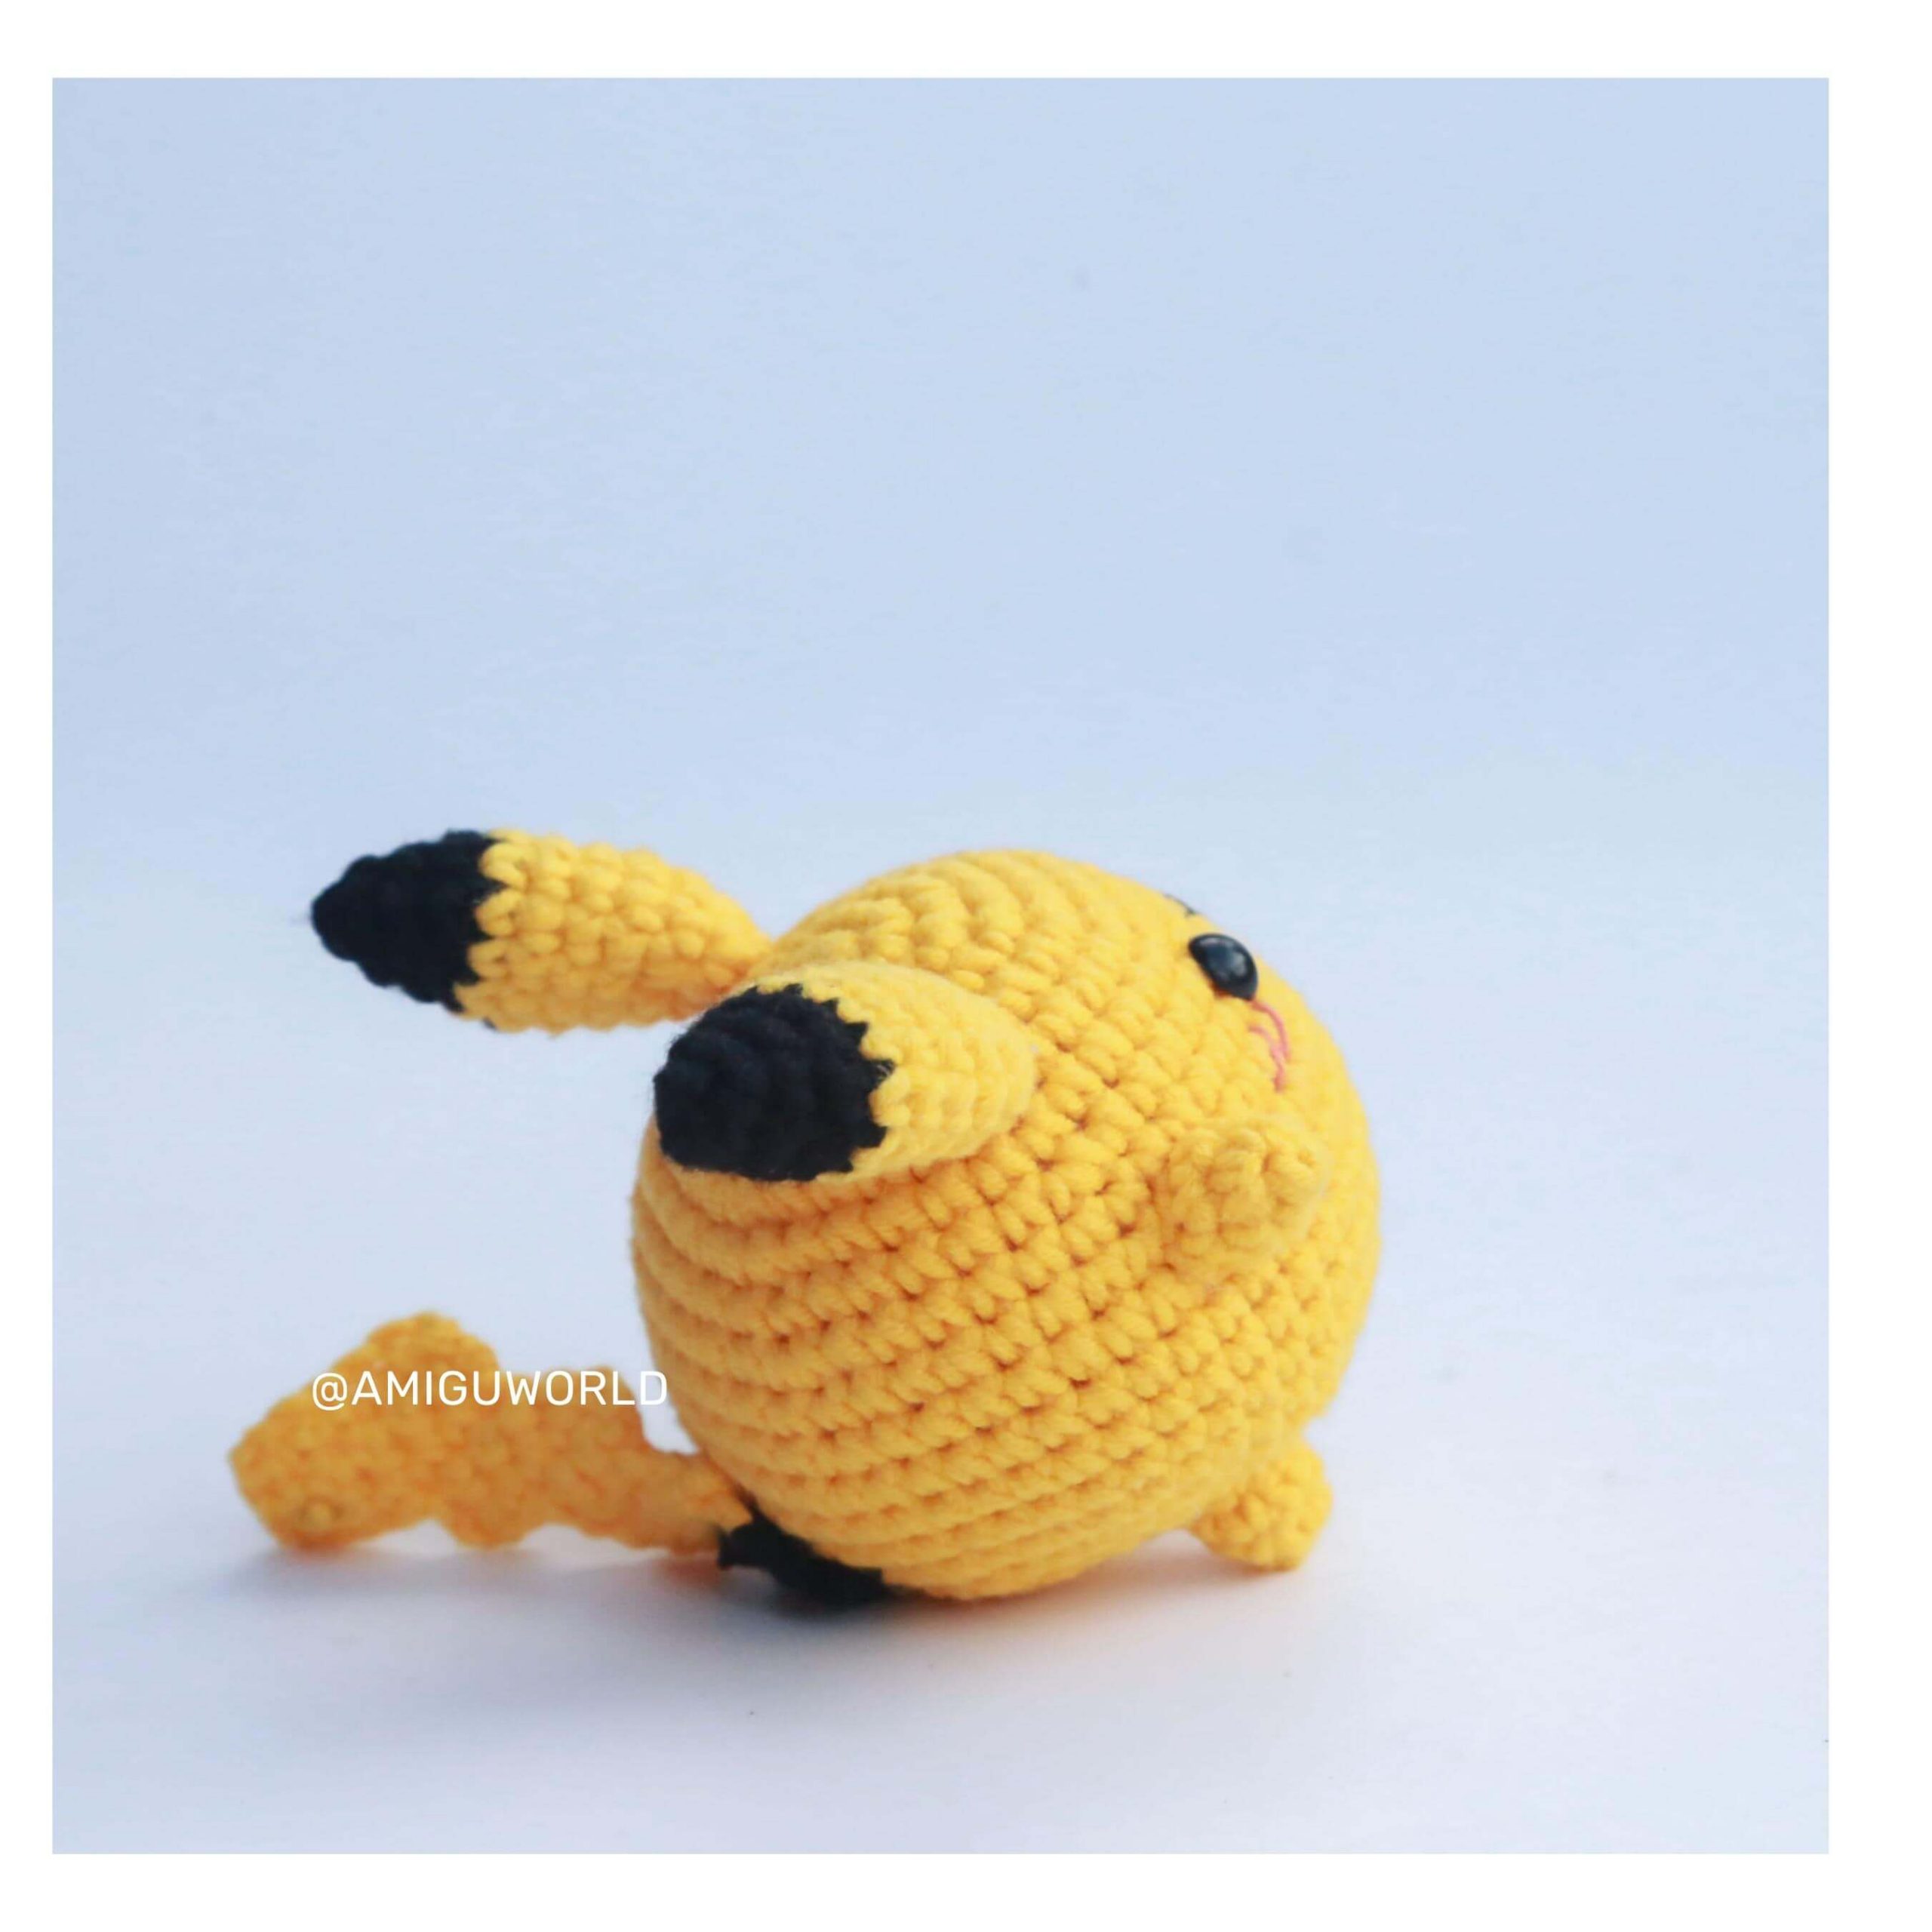 pikachu-amigurumi-crochet-pattern-by-amiguworld (3)